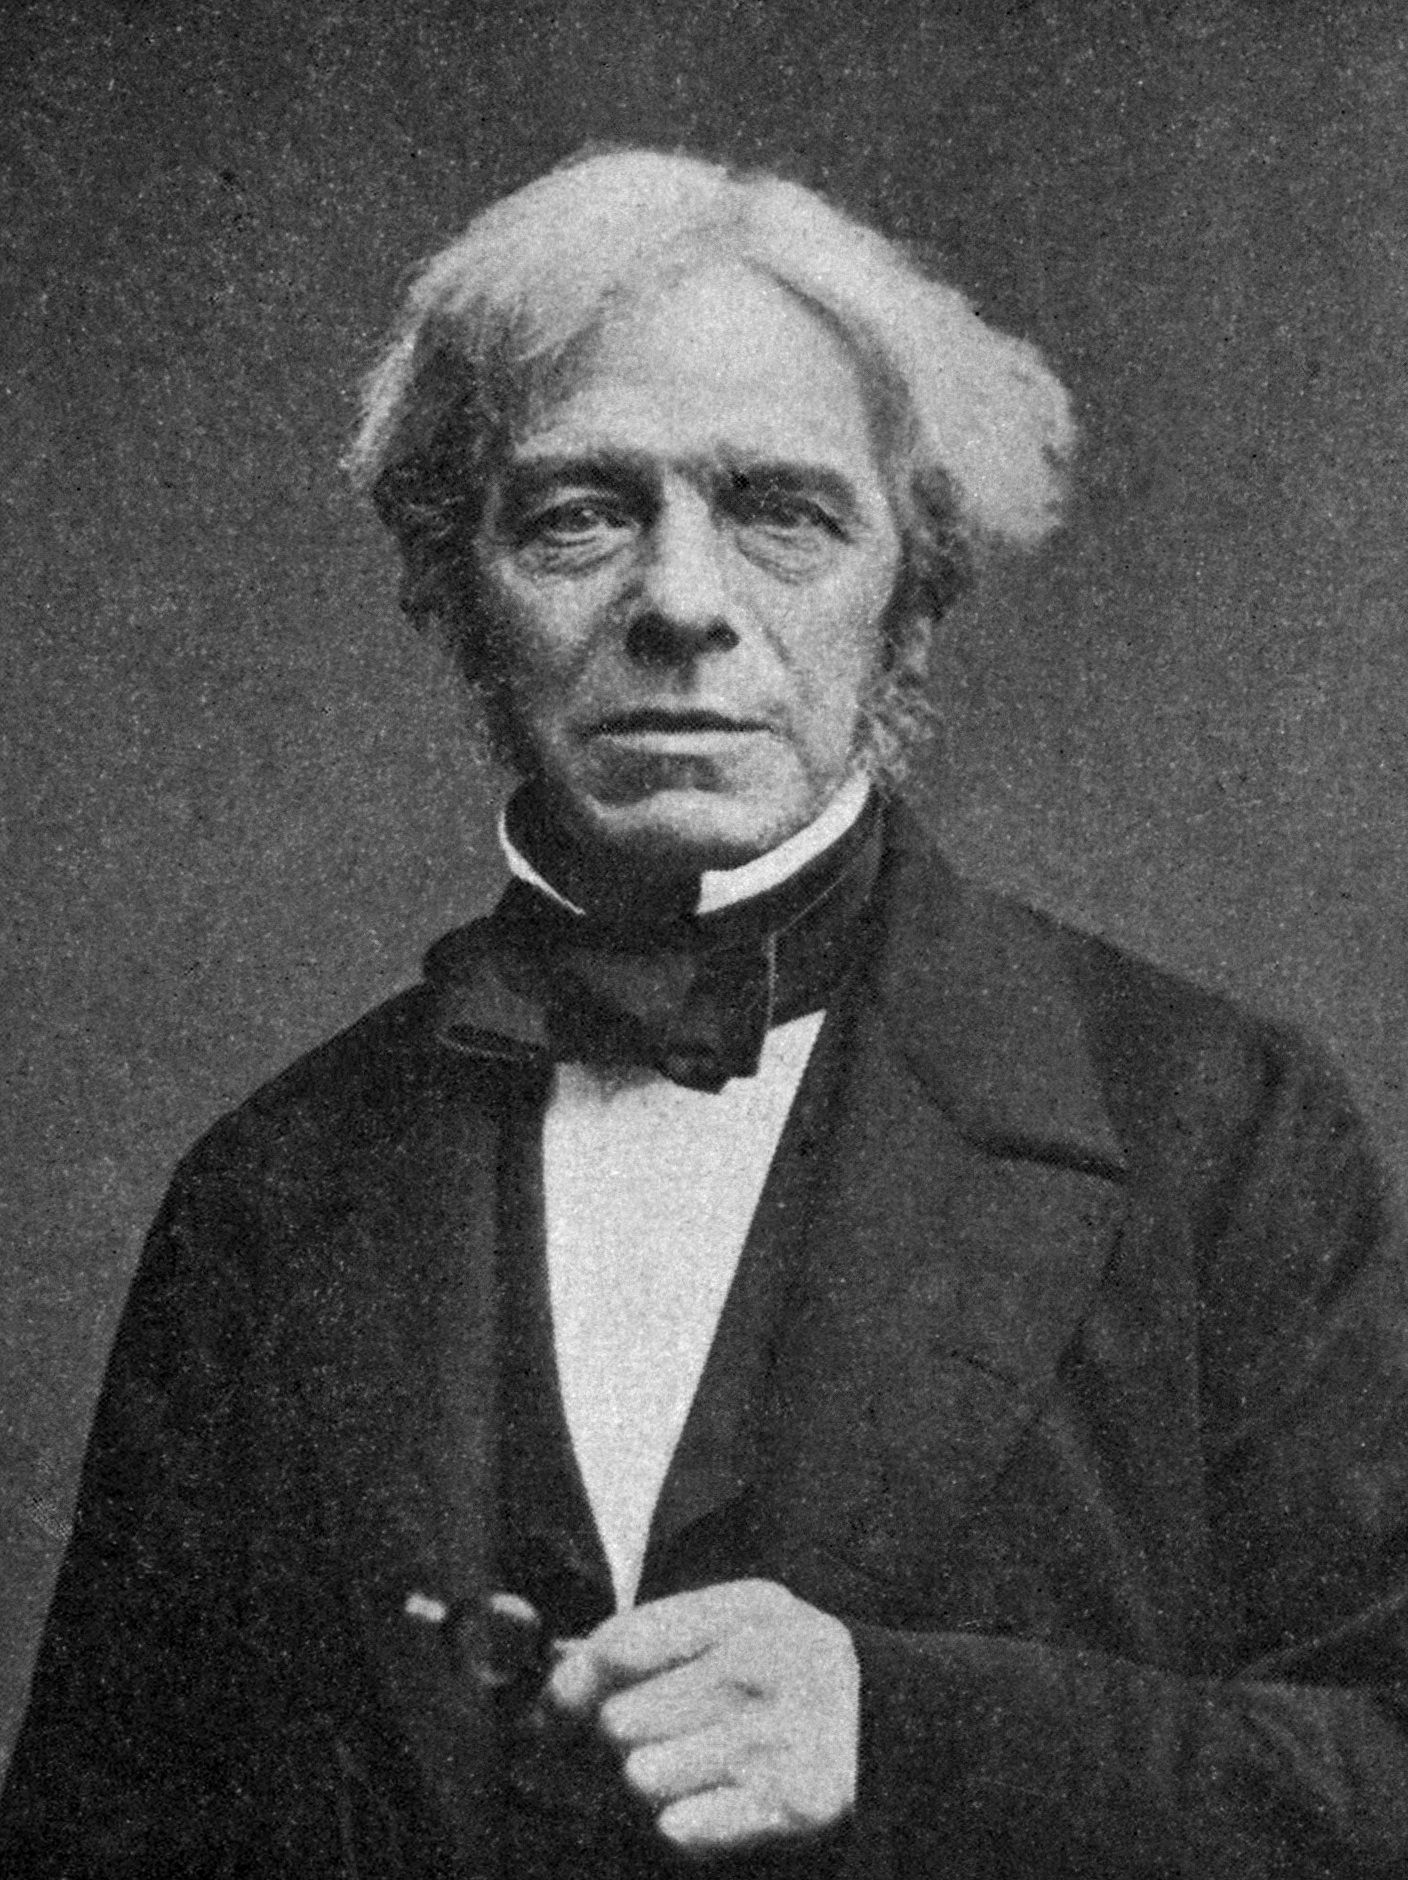 http://upload.wikimedia.org/wikipedia/commons/5/5b/Faraday-Millikan-Gale-1913.jpg